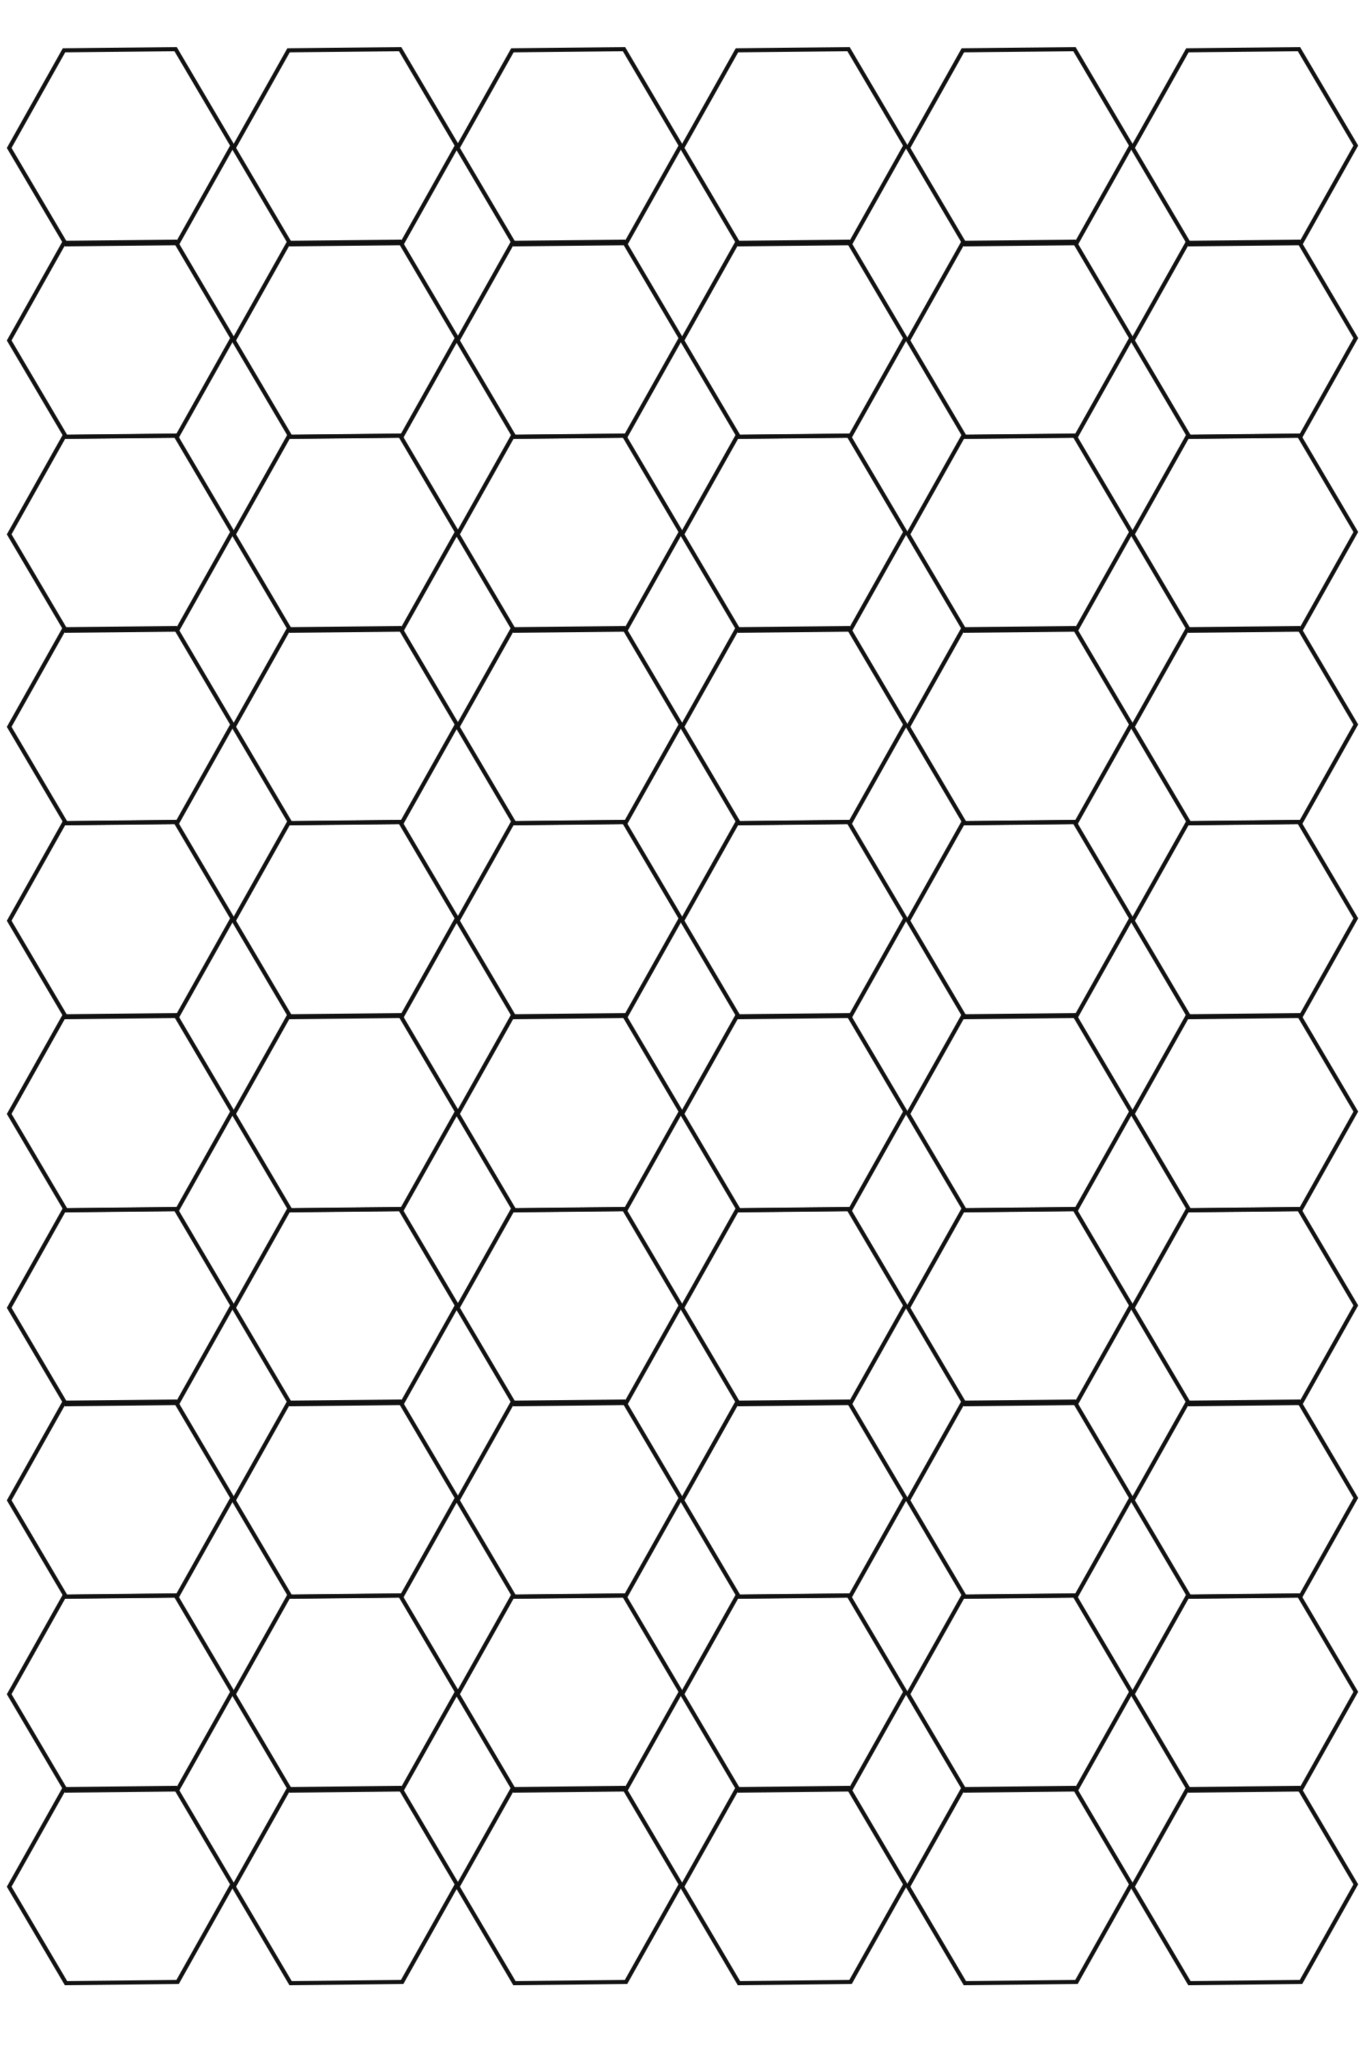 5 Free Printable Hexagonal Graph Paper Template PDF